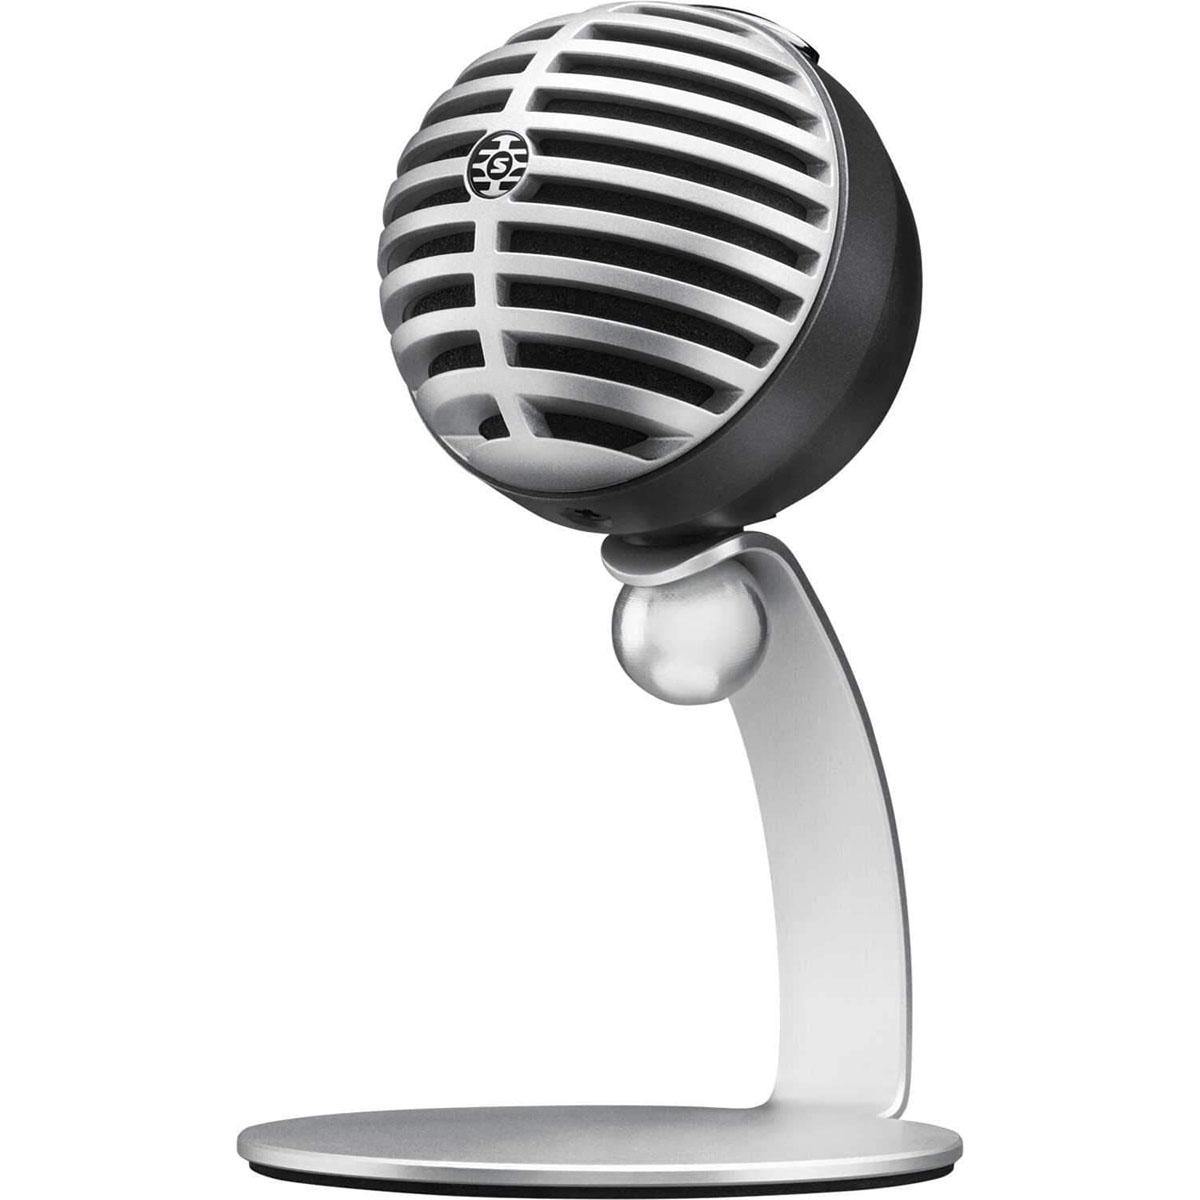 Shure MOTIV MV5 Digital Condenser USB and Lightning Microphone for $54.97 Shipped